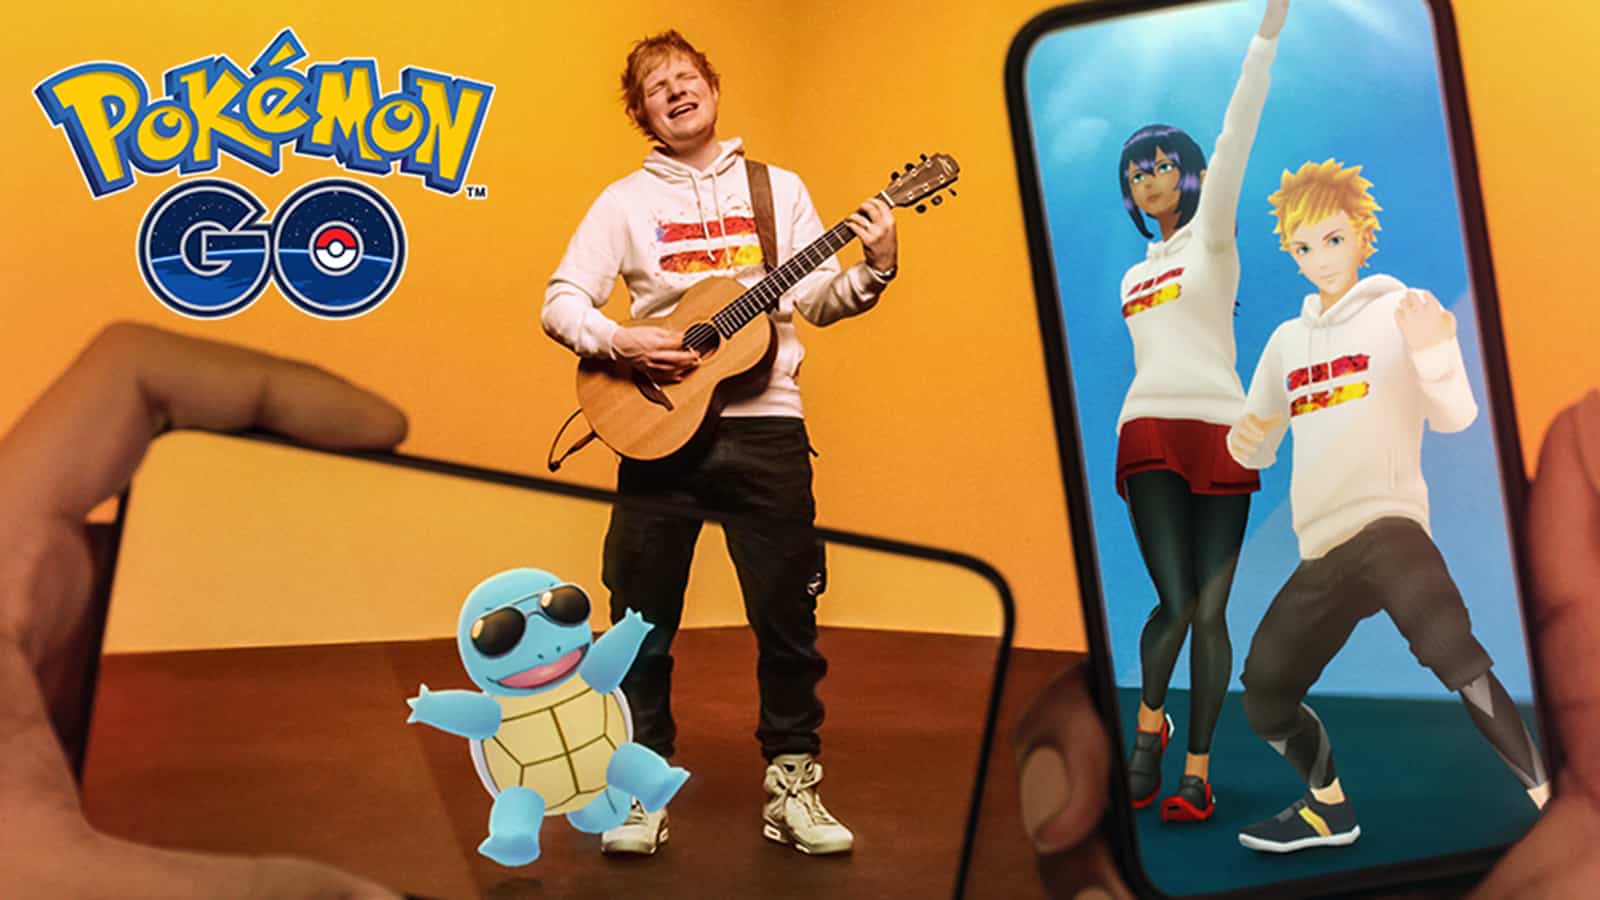 Ed Sheeran performing in Pokemon Go